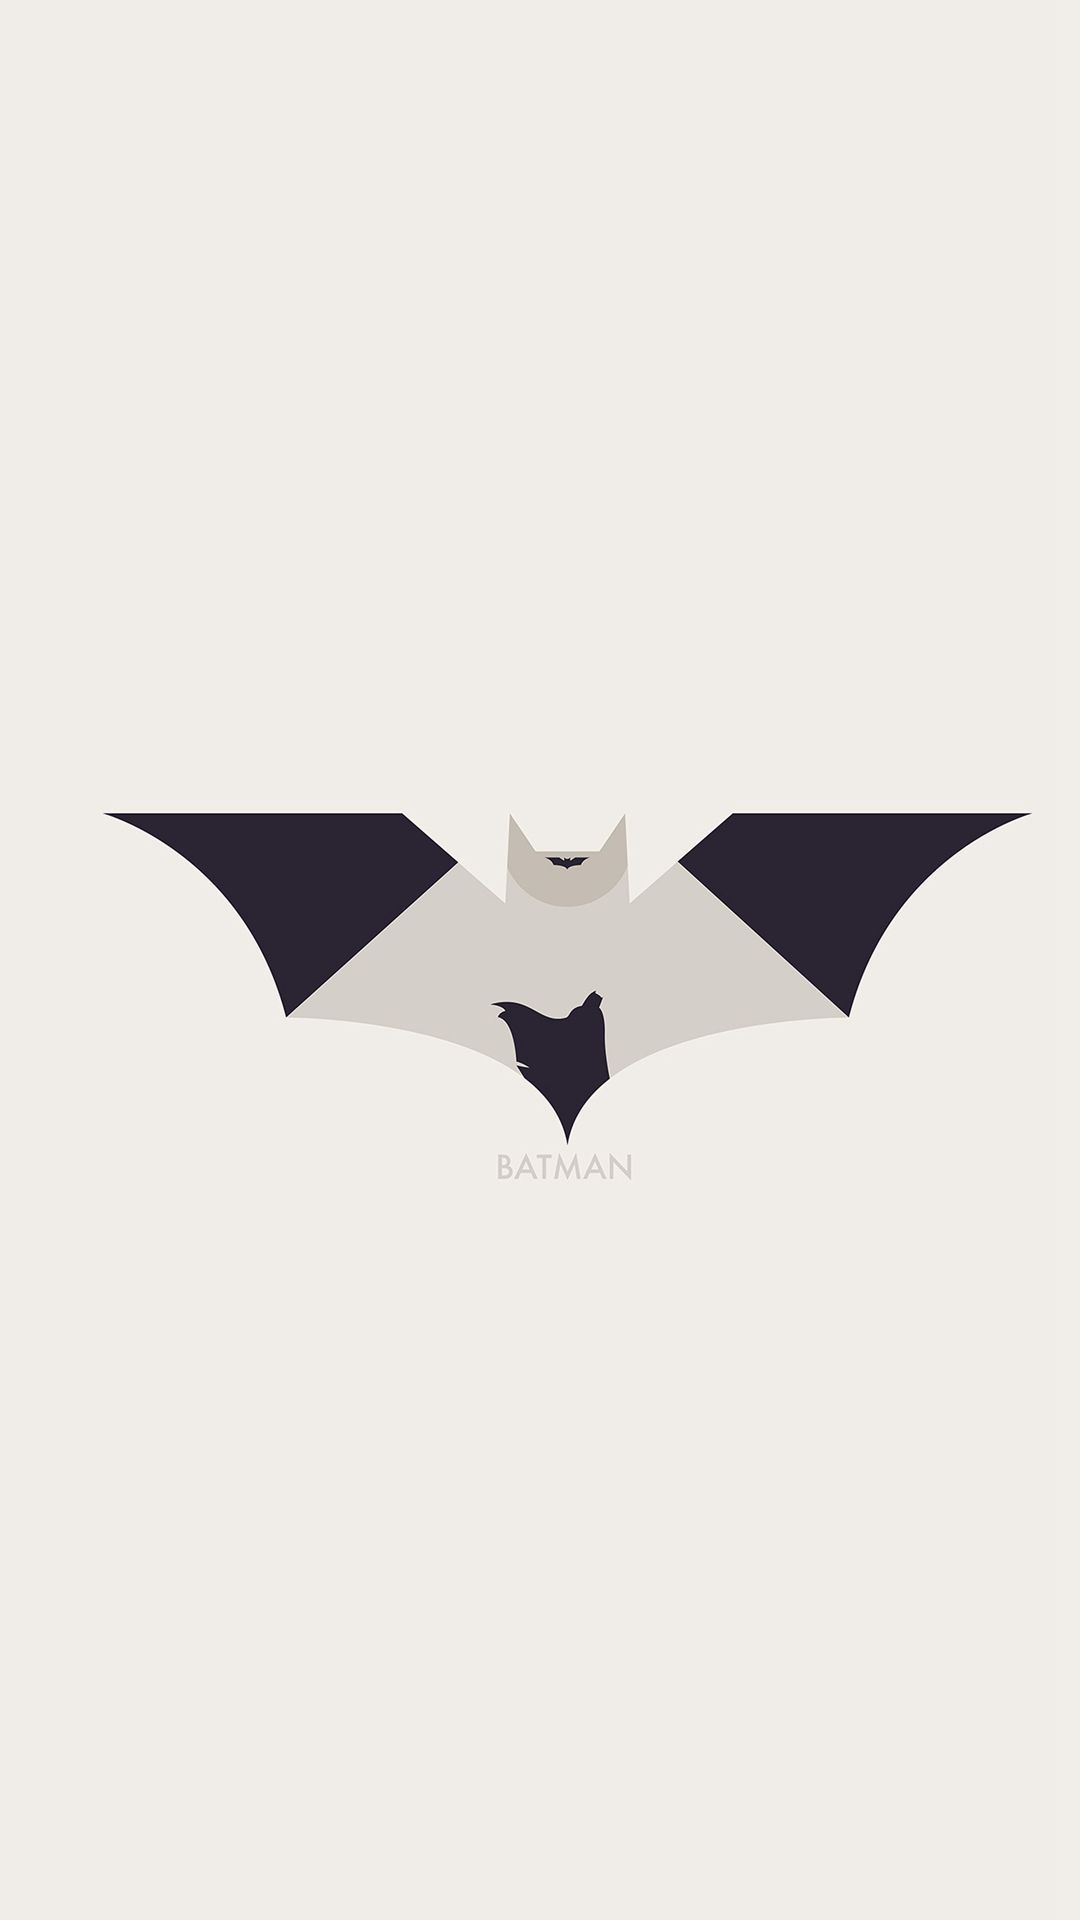 Batman, Bat, Fictional Character, Logo, Justice League, Blackandwhite 